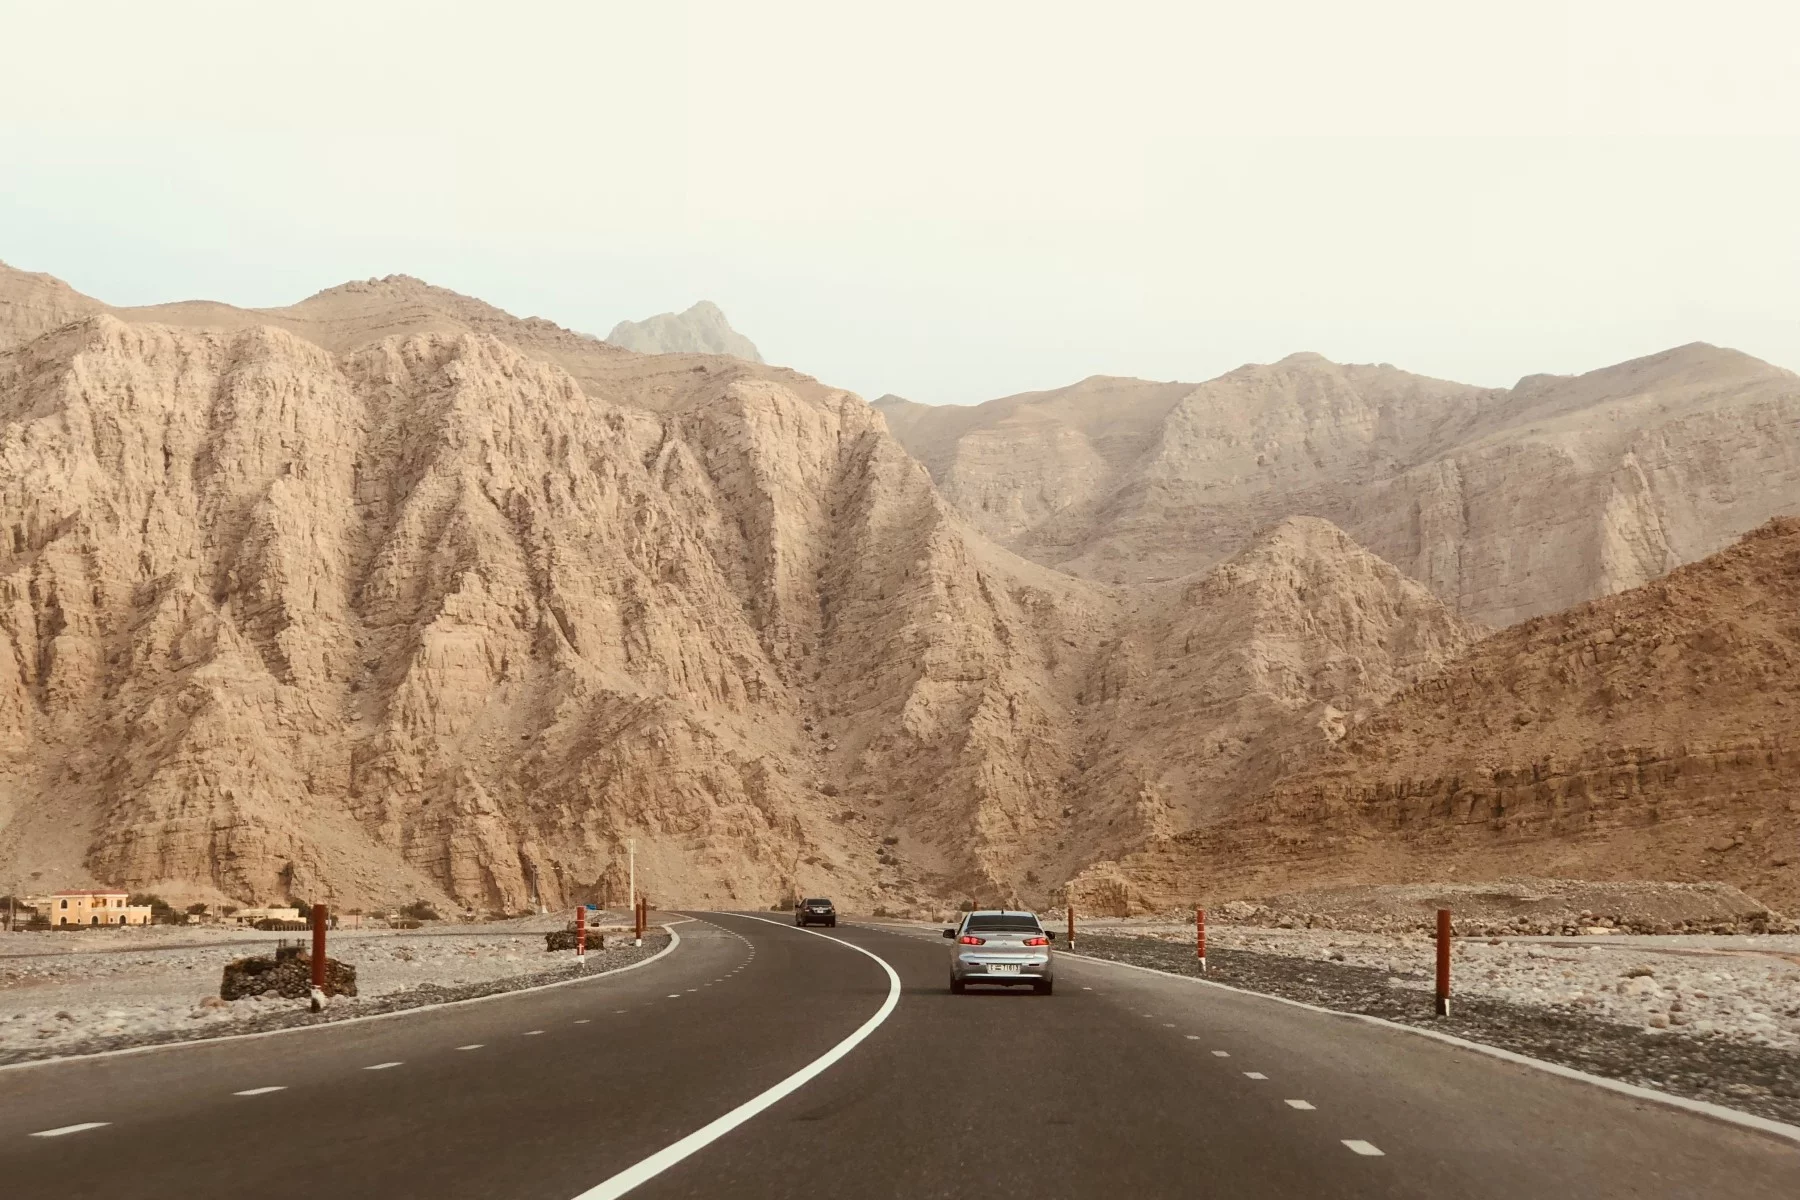 Driving on the road near the Jabal Bil Ays mountain range, UAE.